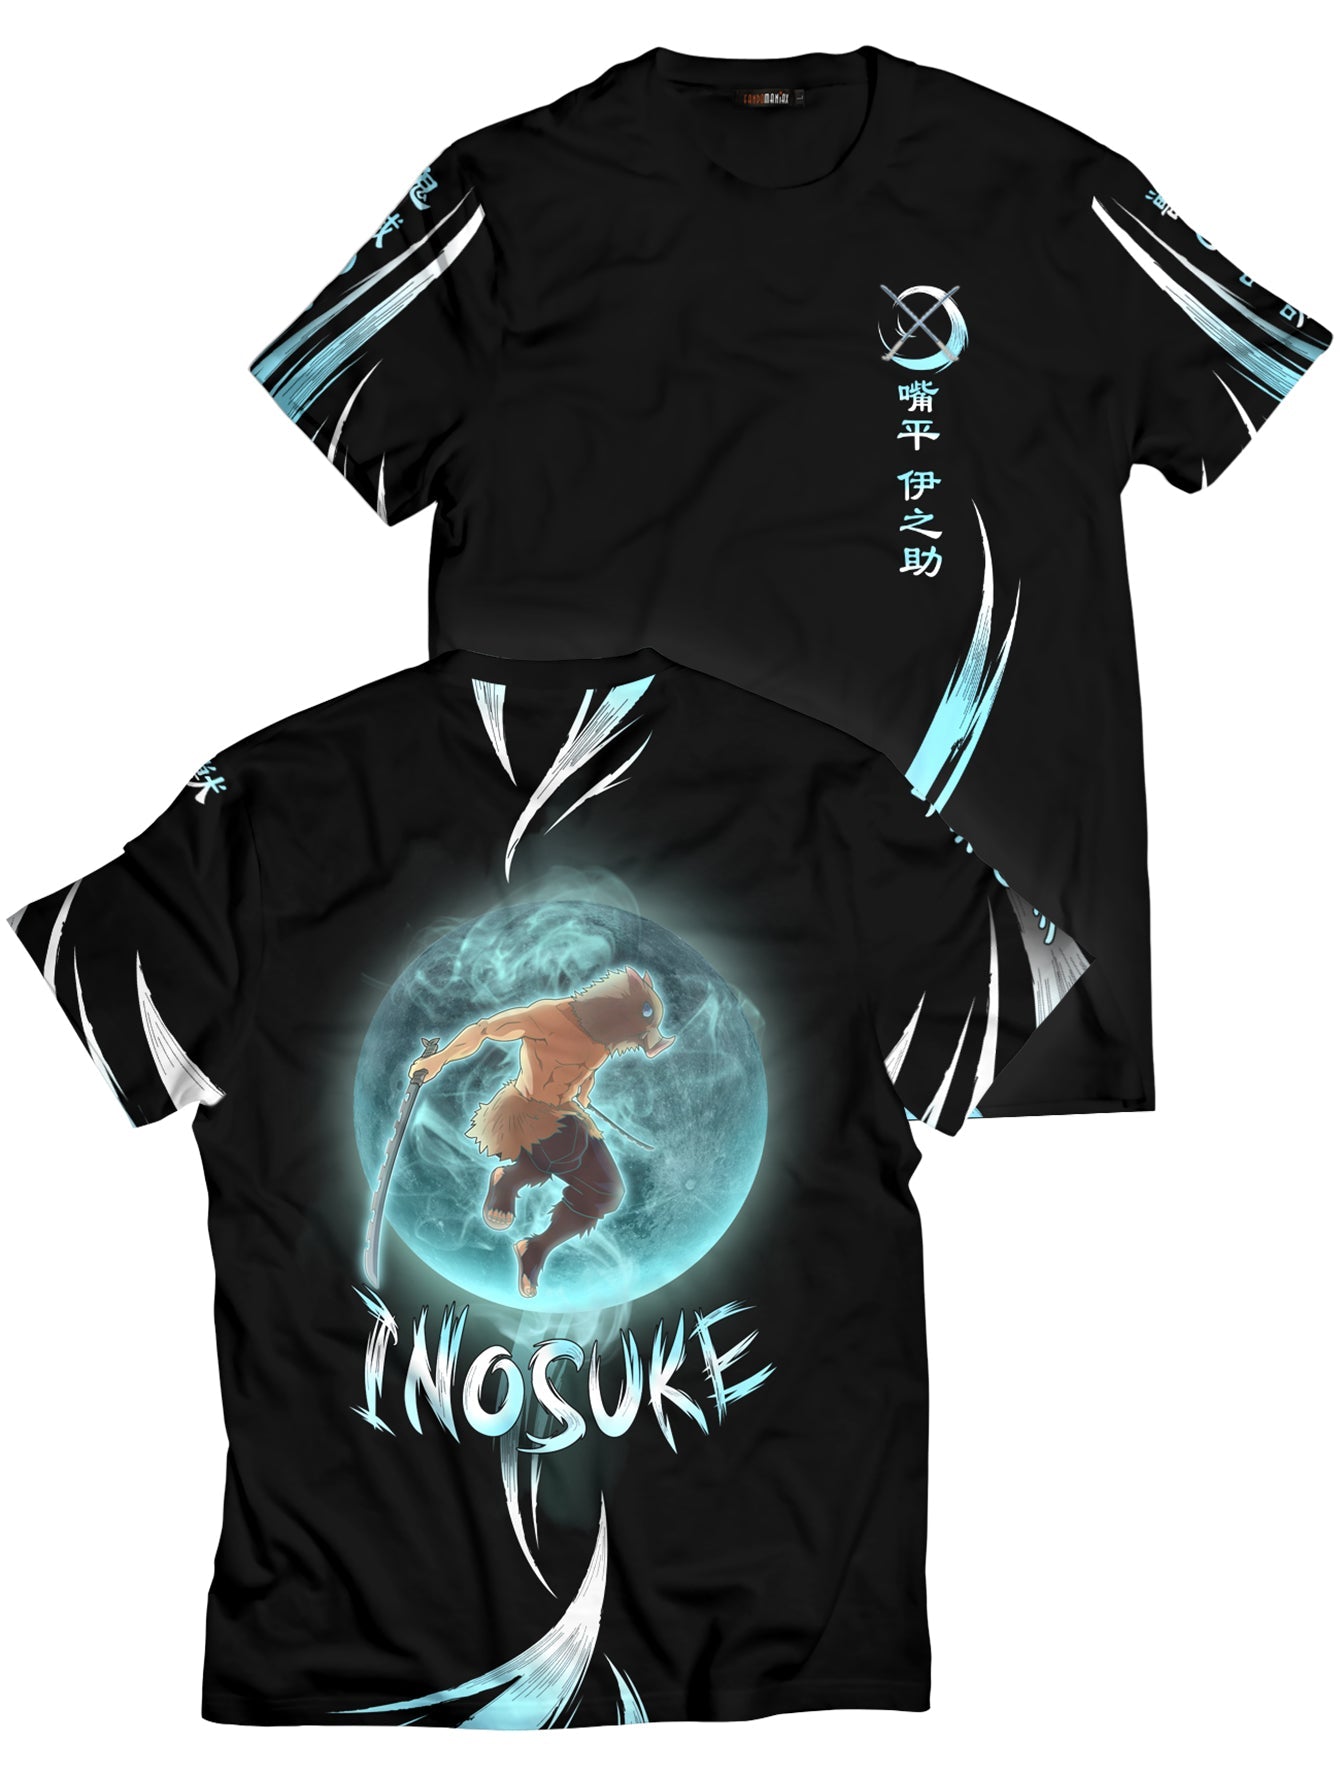 Fandomaniax - Inosuke Moonfall Unisex T-Shirt